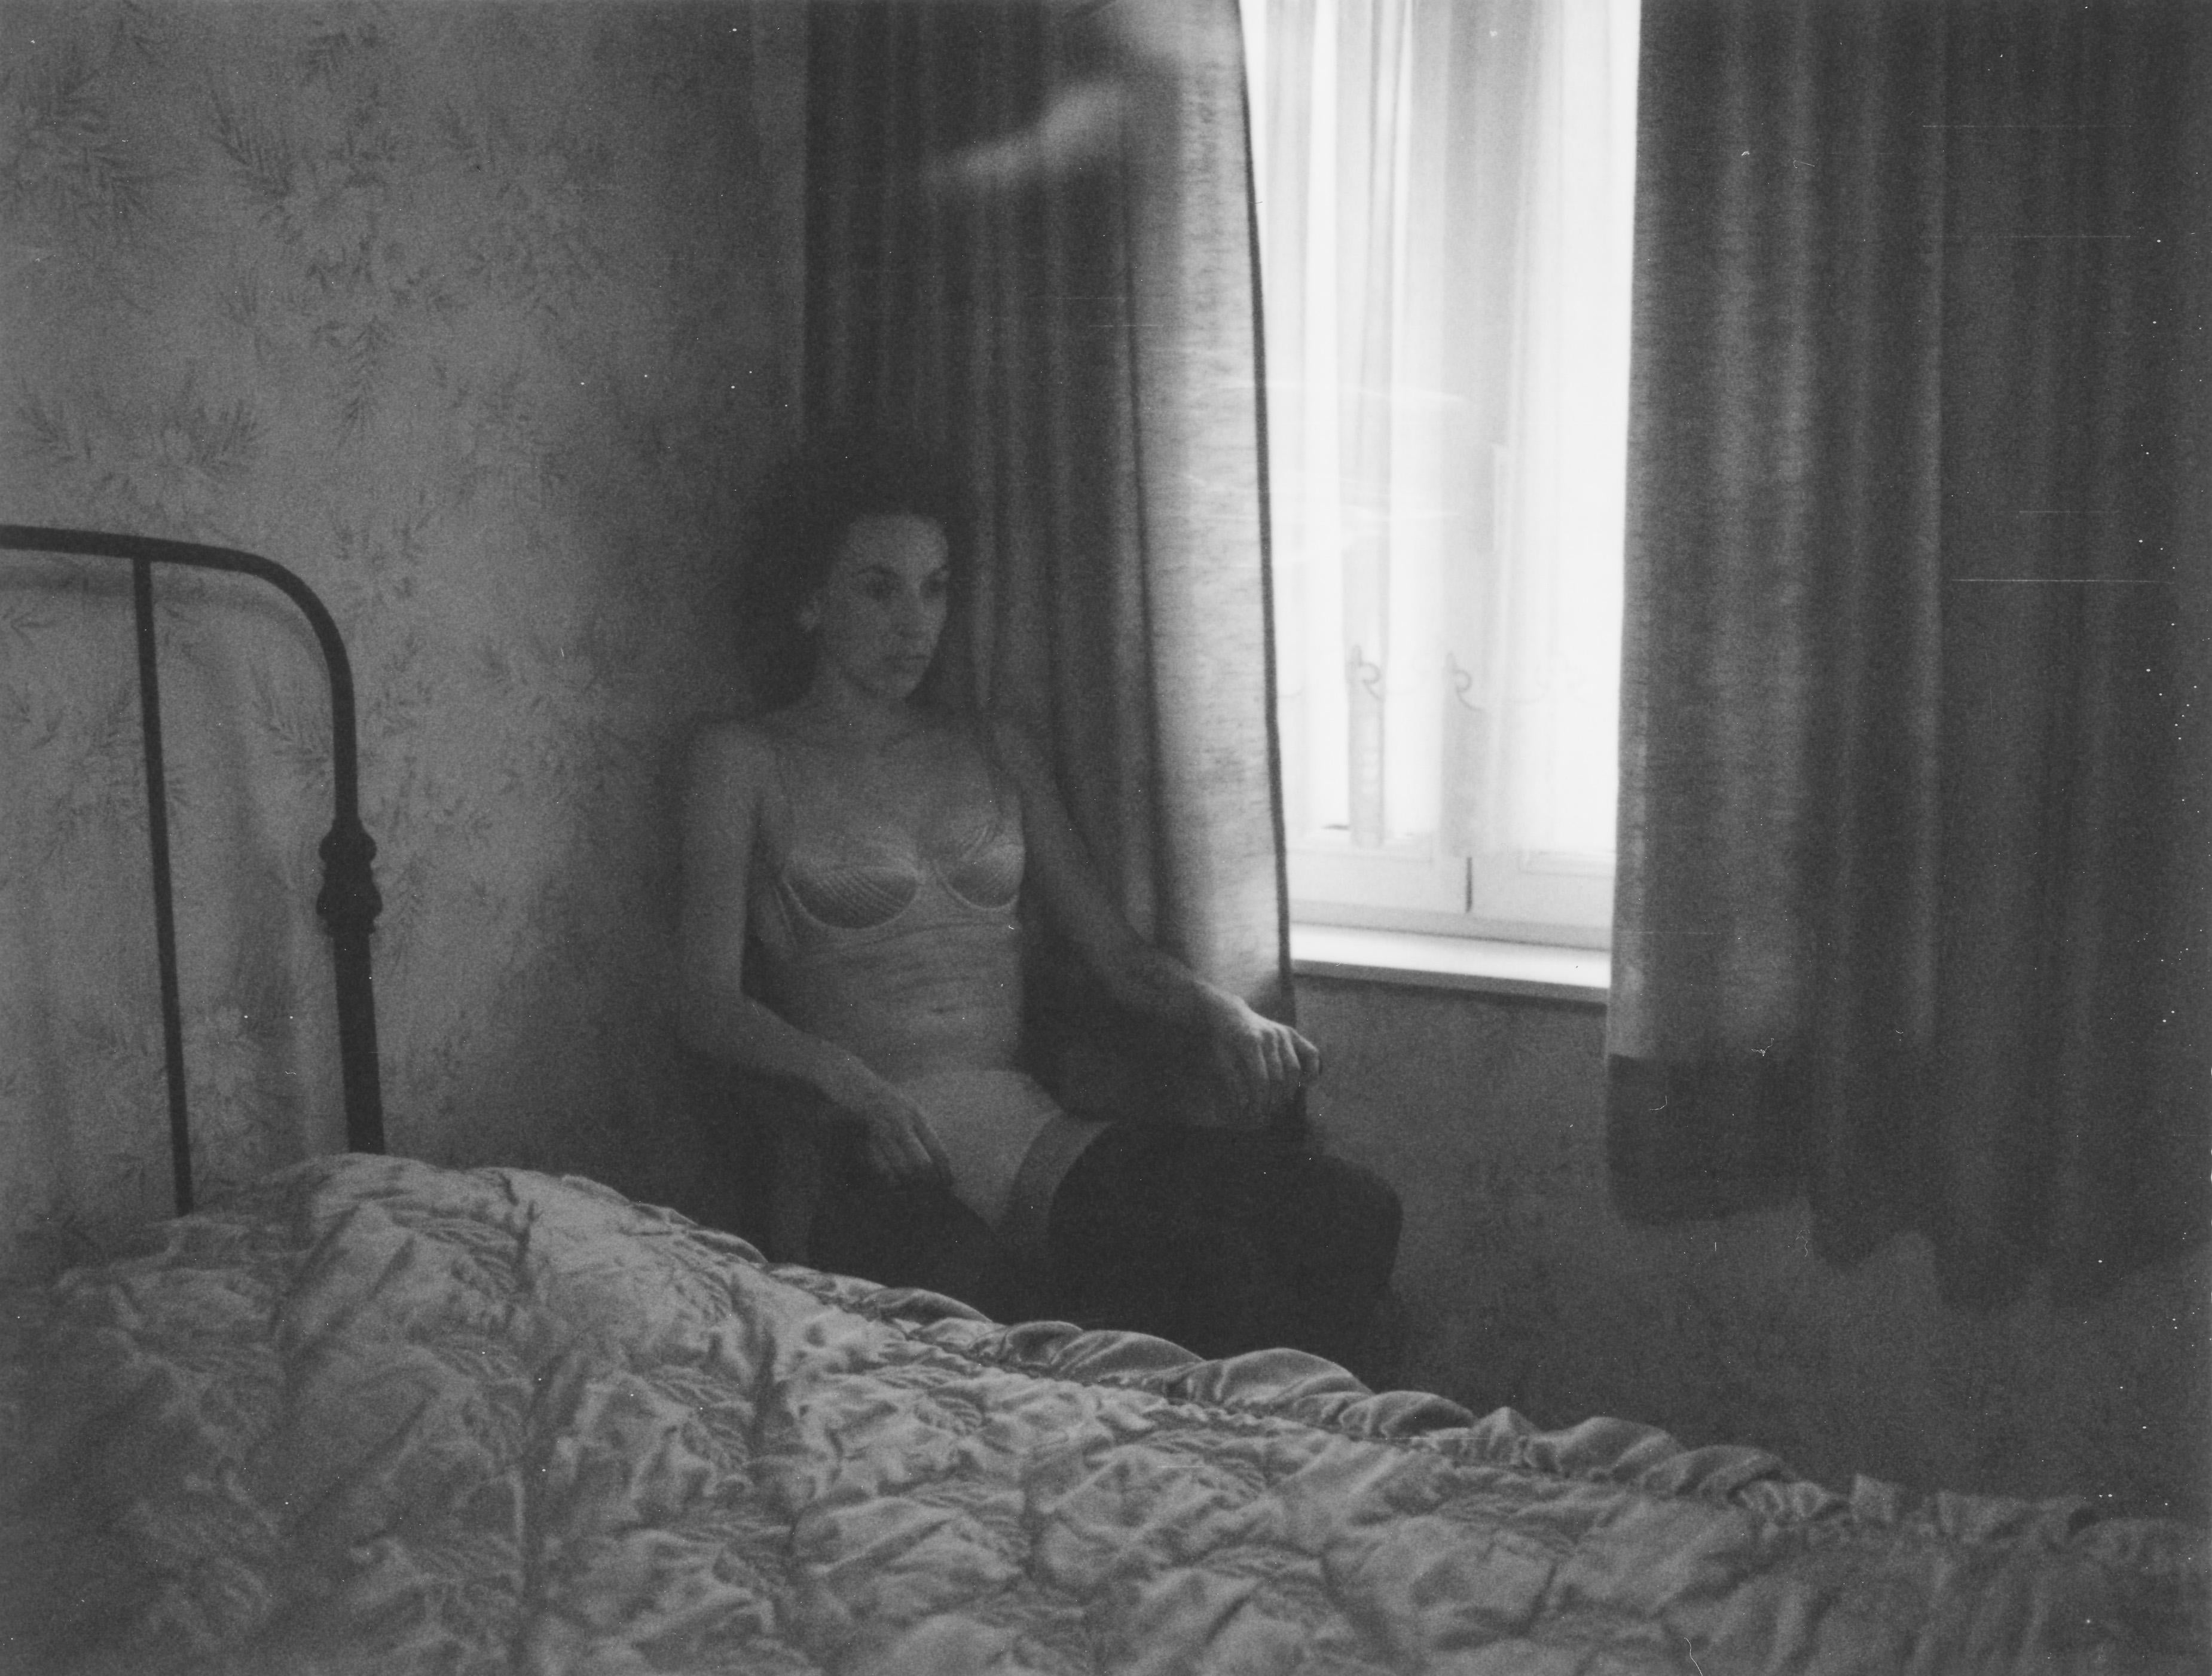 Kirsten Thys van den Audenaerde Nude Photograph - Exit wound - Contemporary, Nude, Women, Polaroid, 21st Century